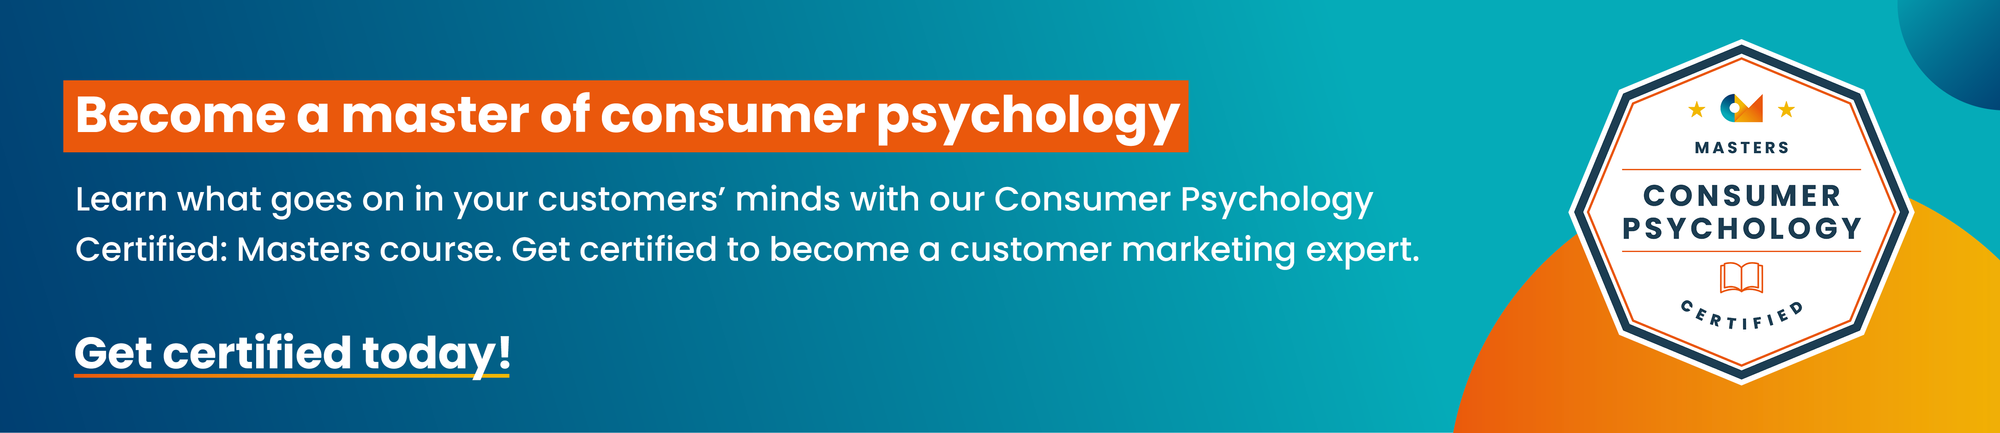 Consumer psychology masters